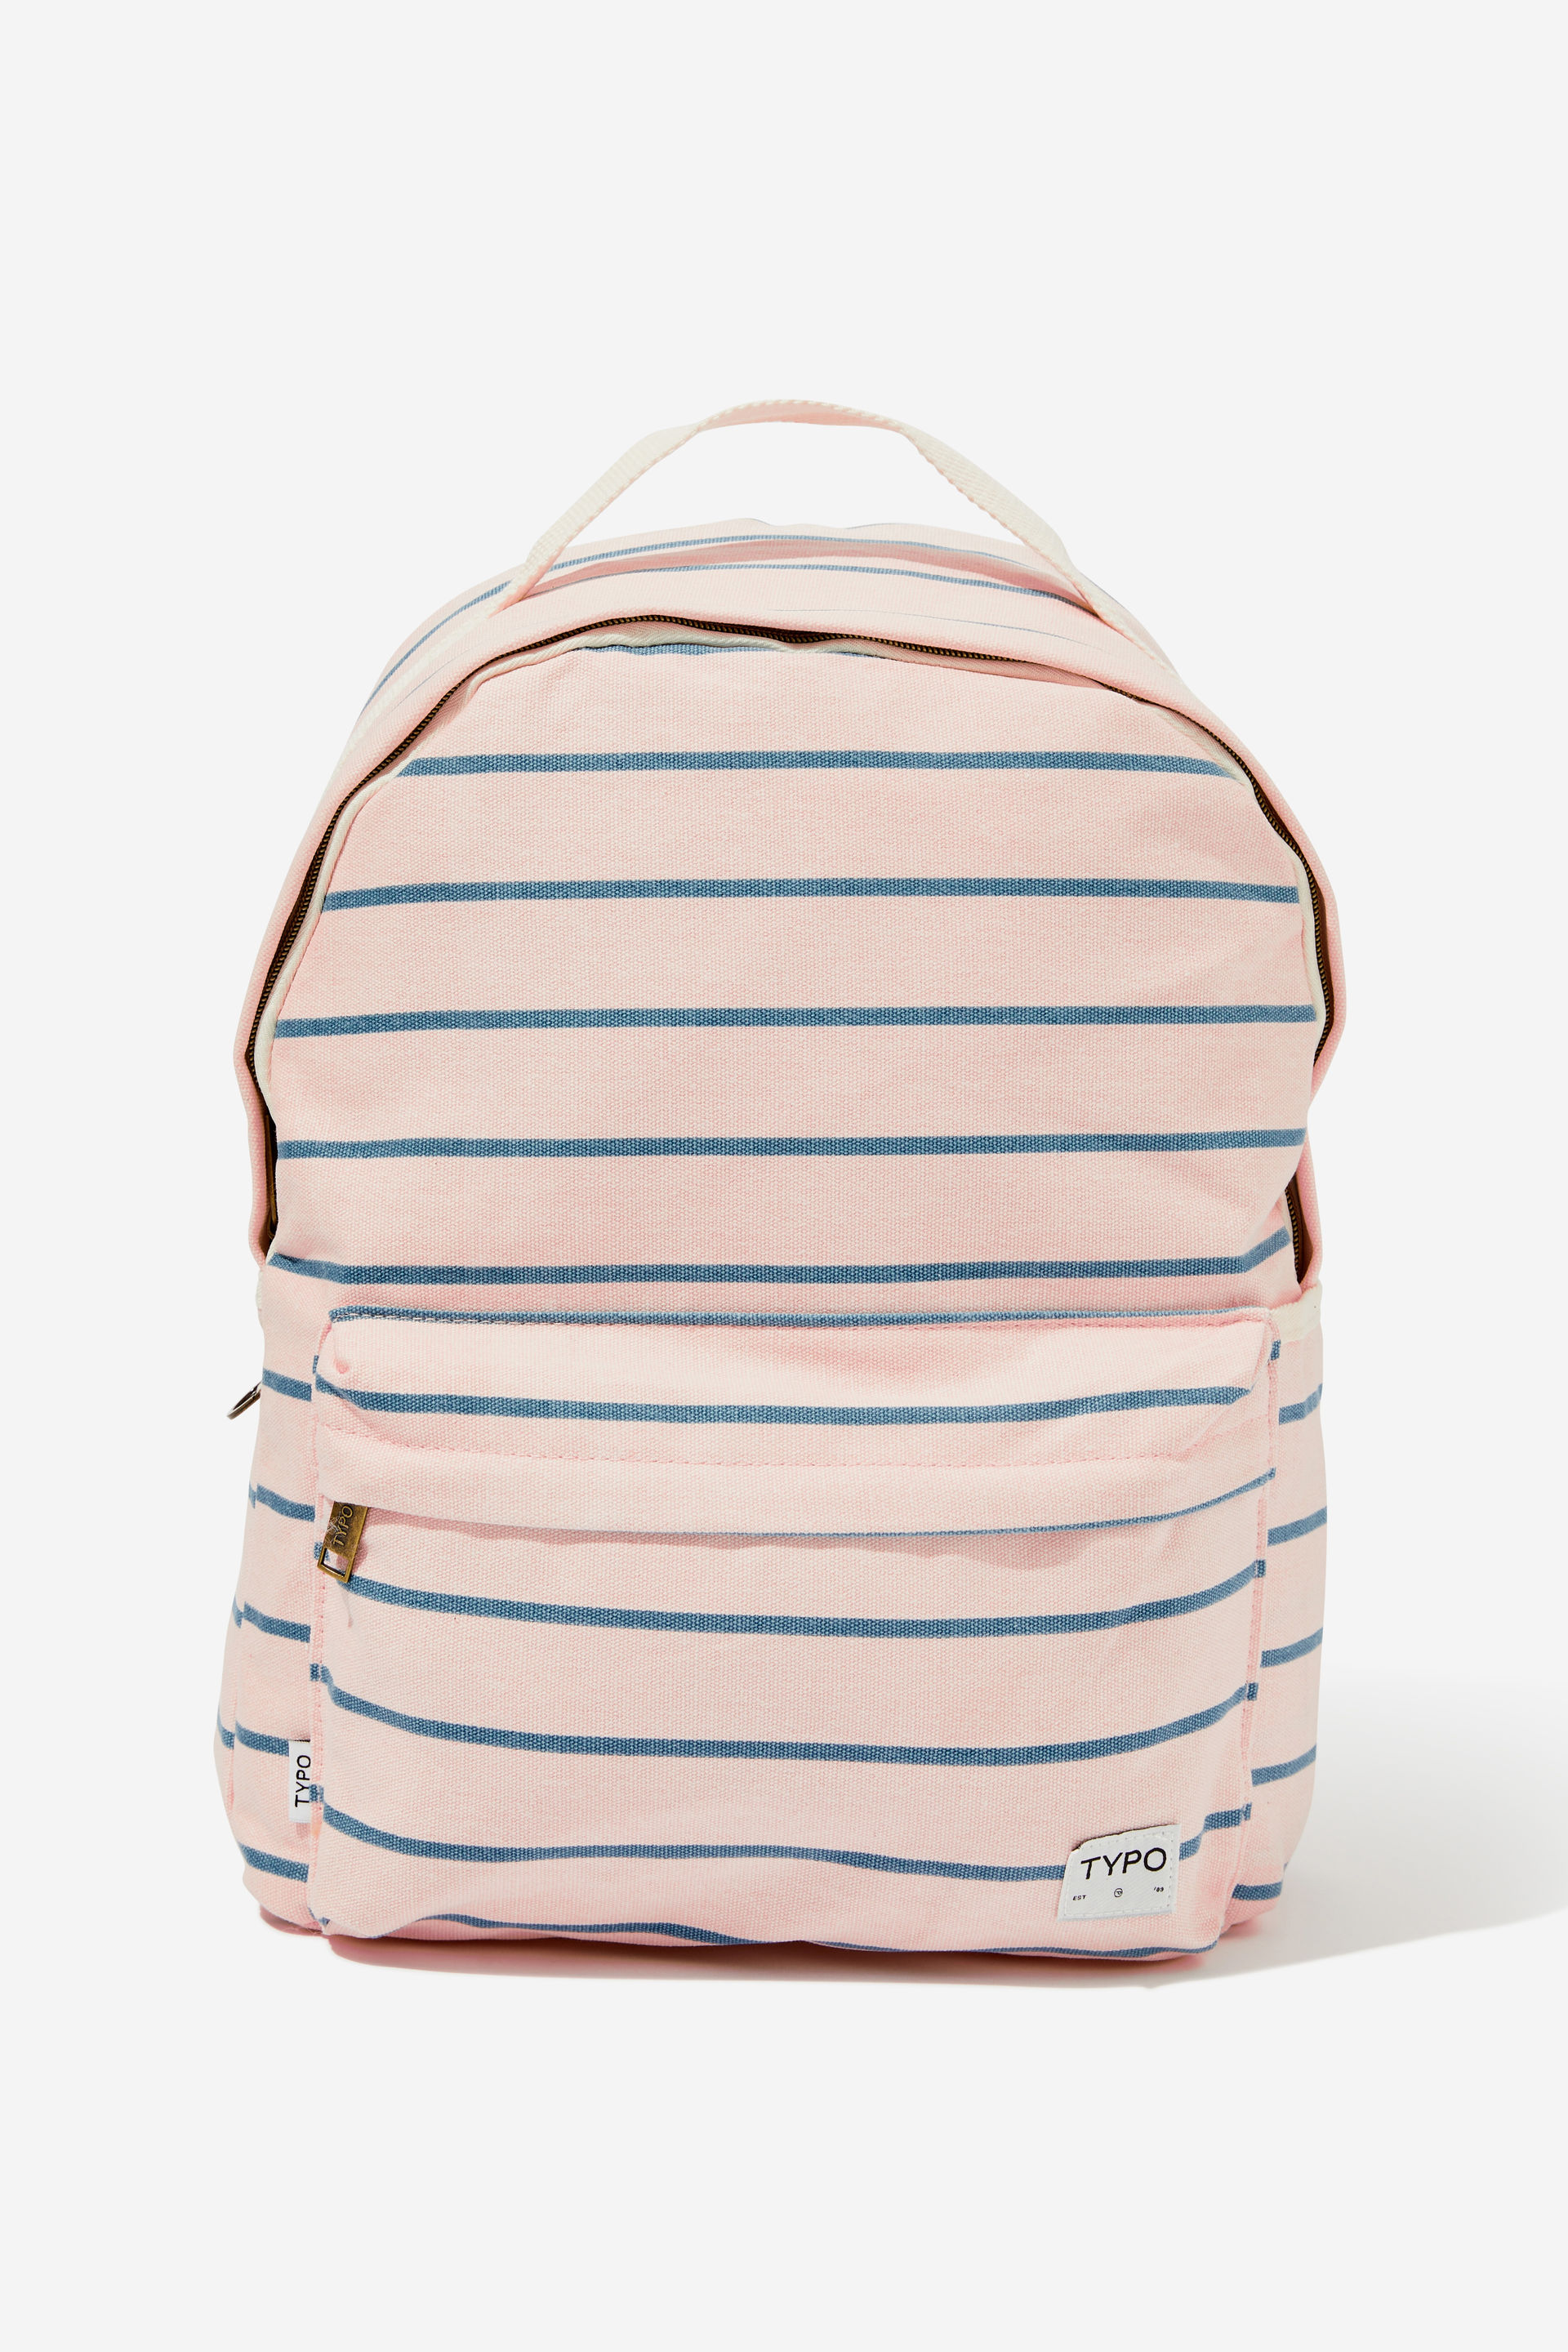 Typo - Alumni Backpack - Varsity stripe/ ballet blush